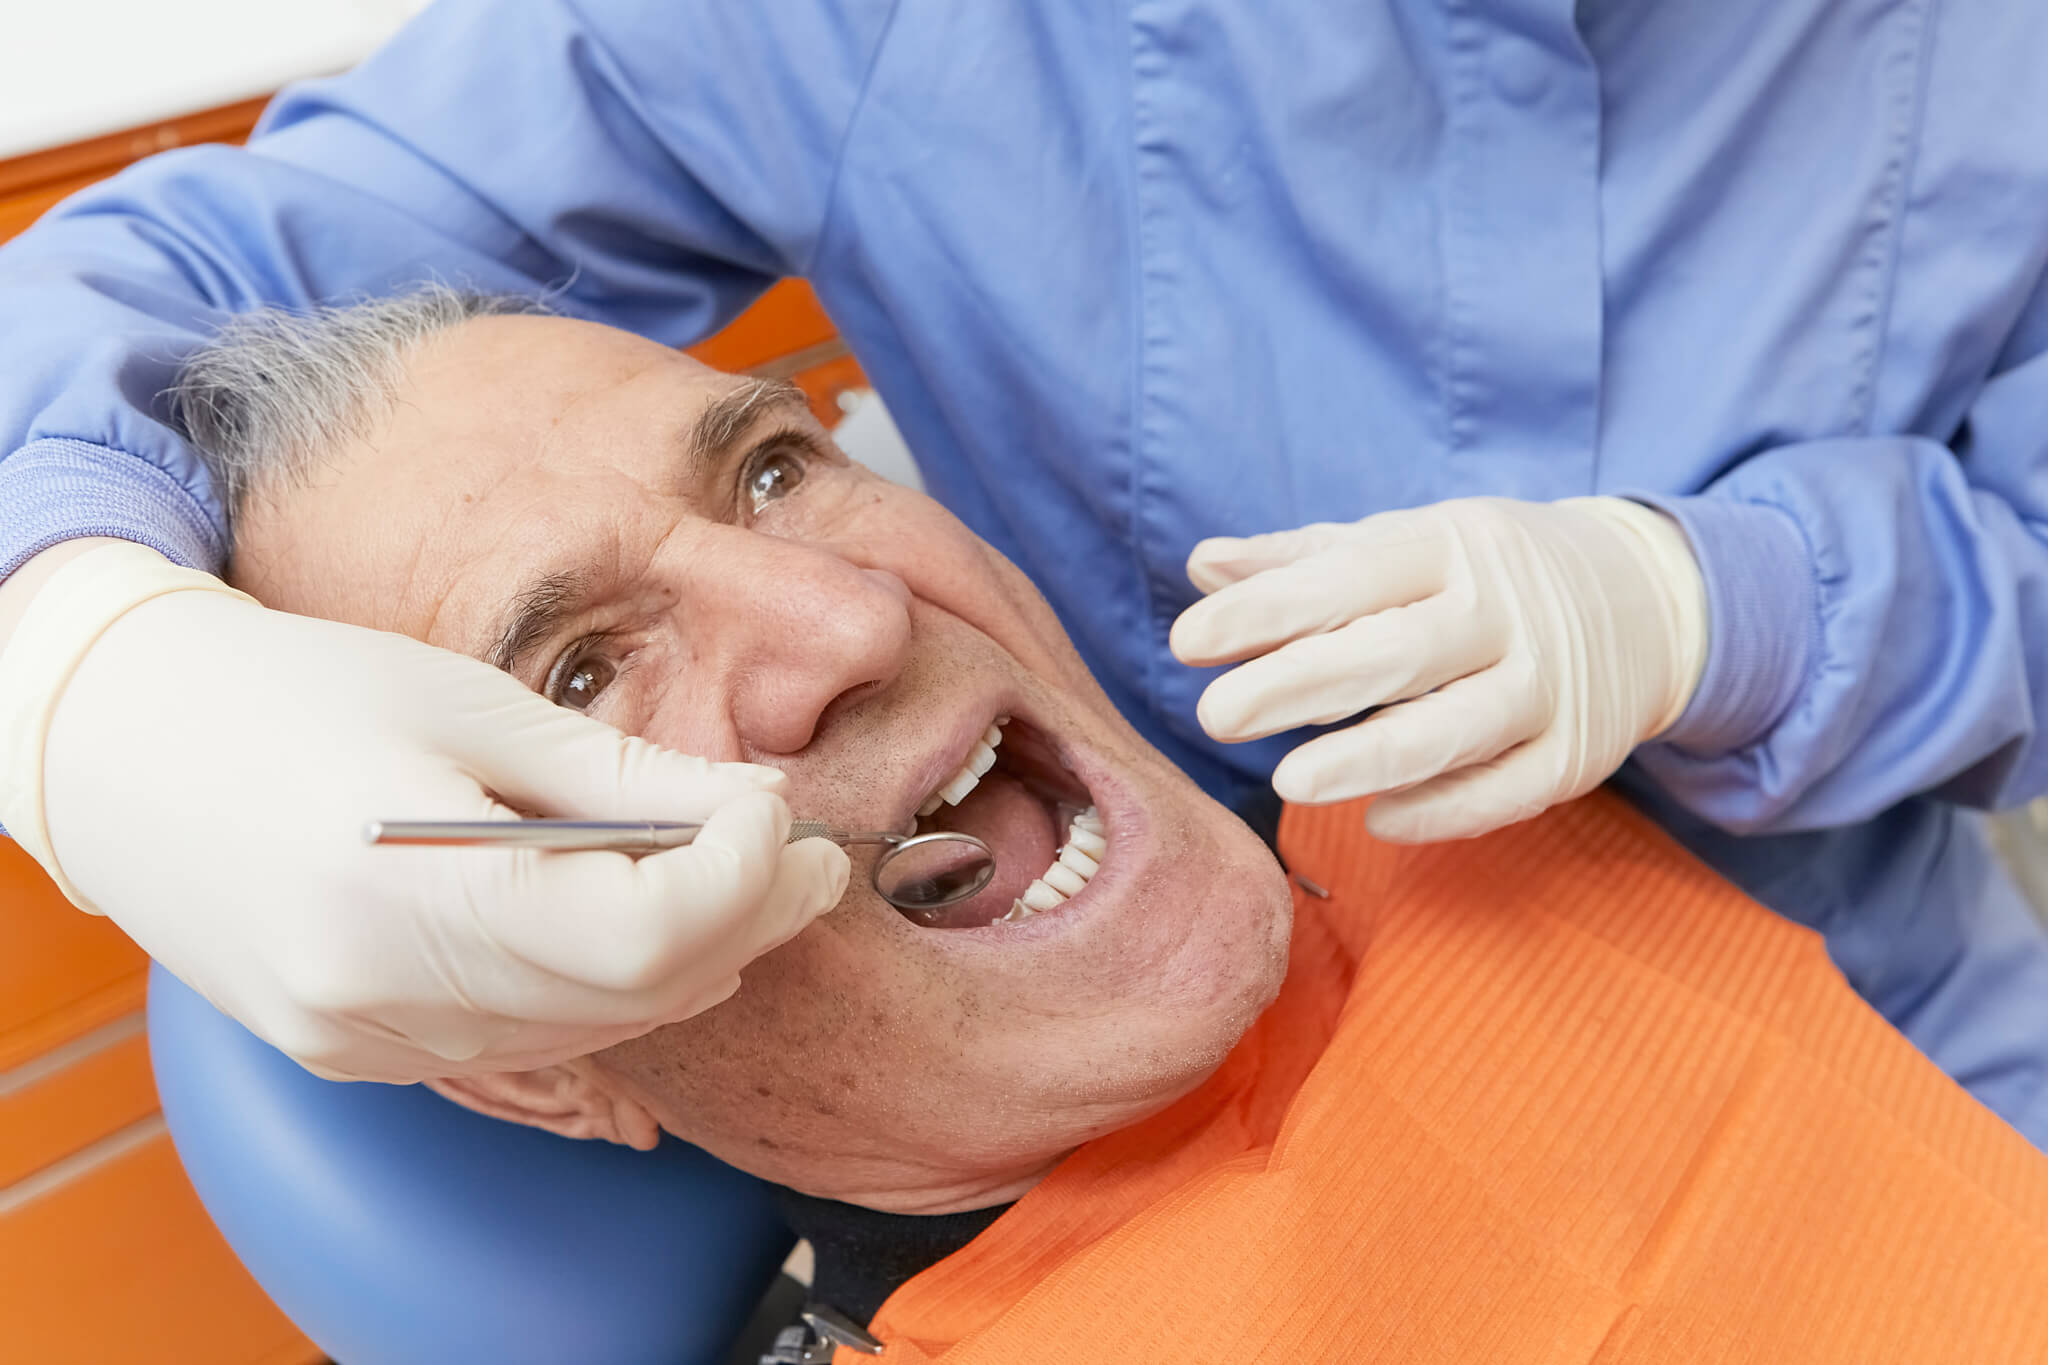 studio dentistico tg dental roma dentista finocchio borghesiana implantologia igiene dentale